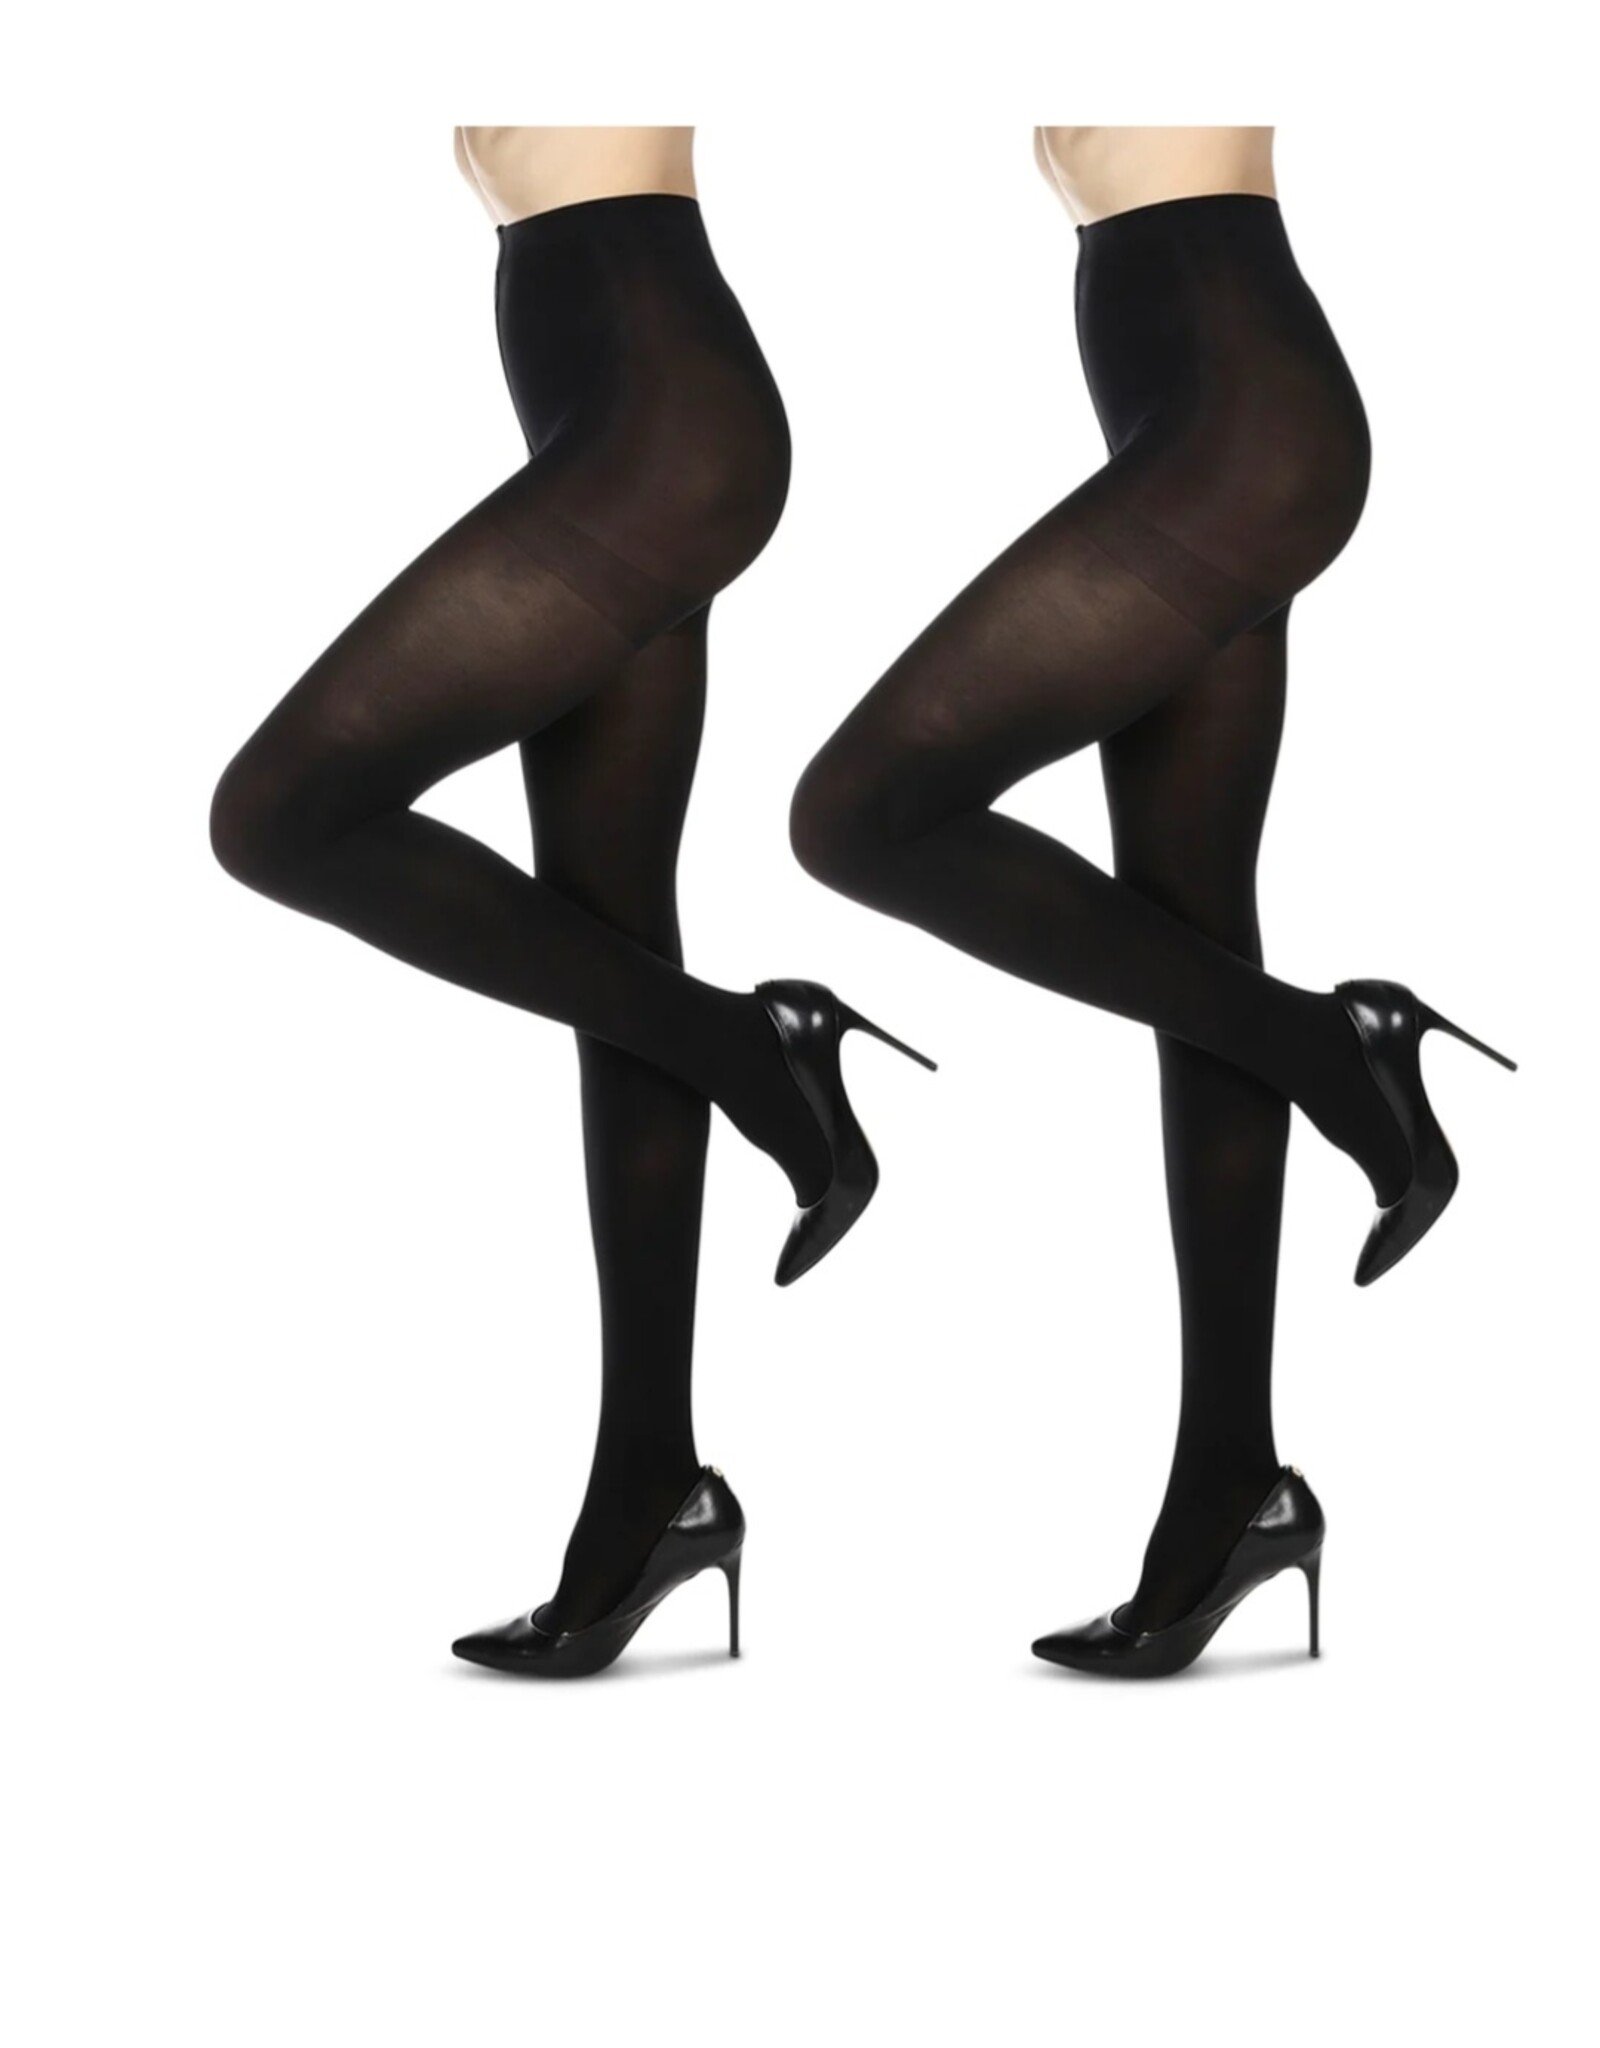 https://cdn.shoplightspeed.com/shops/635284/files/59105098/1600x2048x2/memoi-womens-non-control-top-2-pair-pack-tights-60.jpg